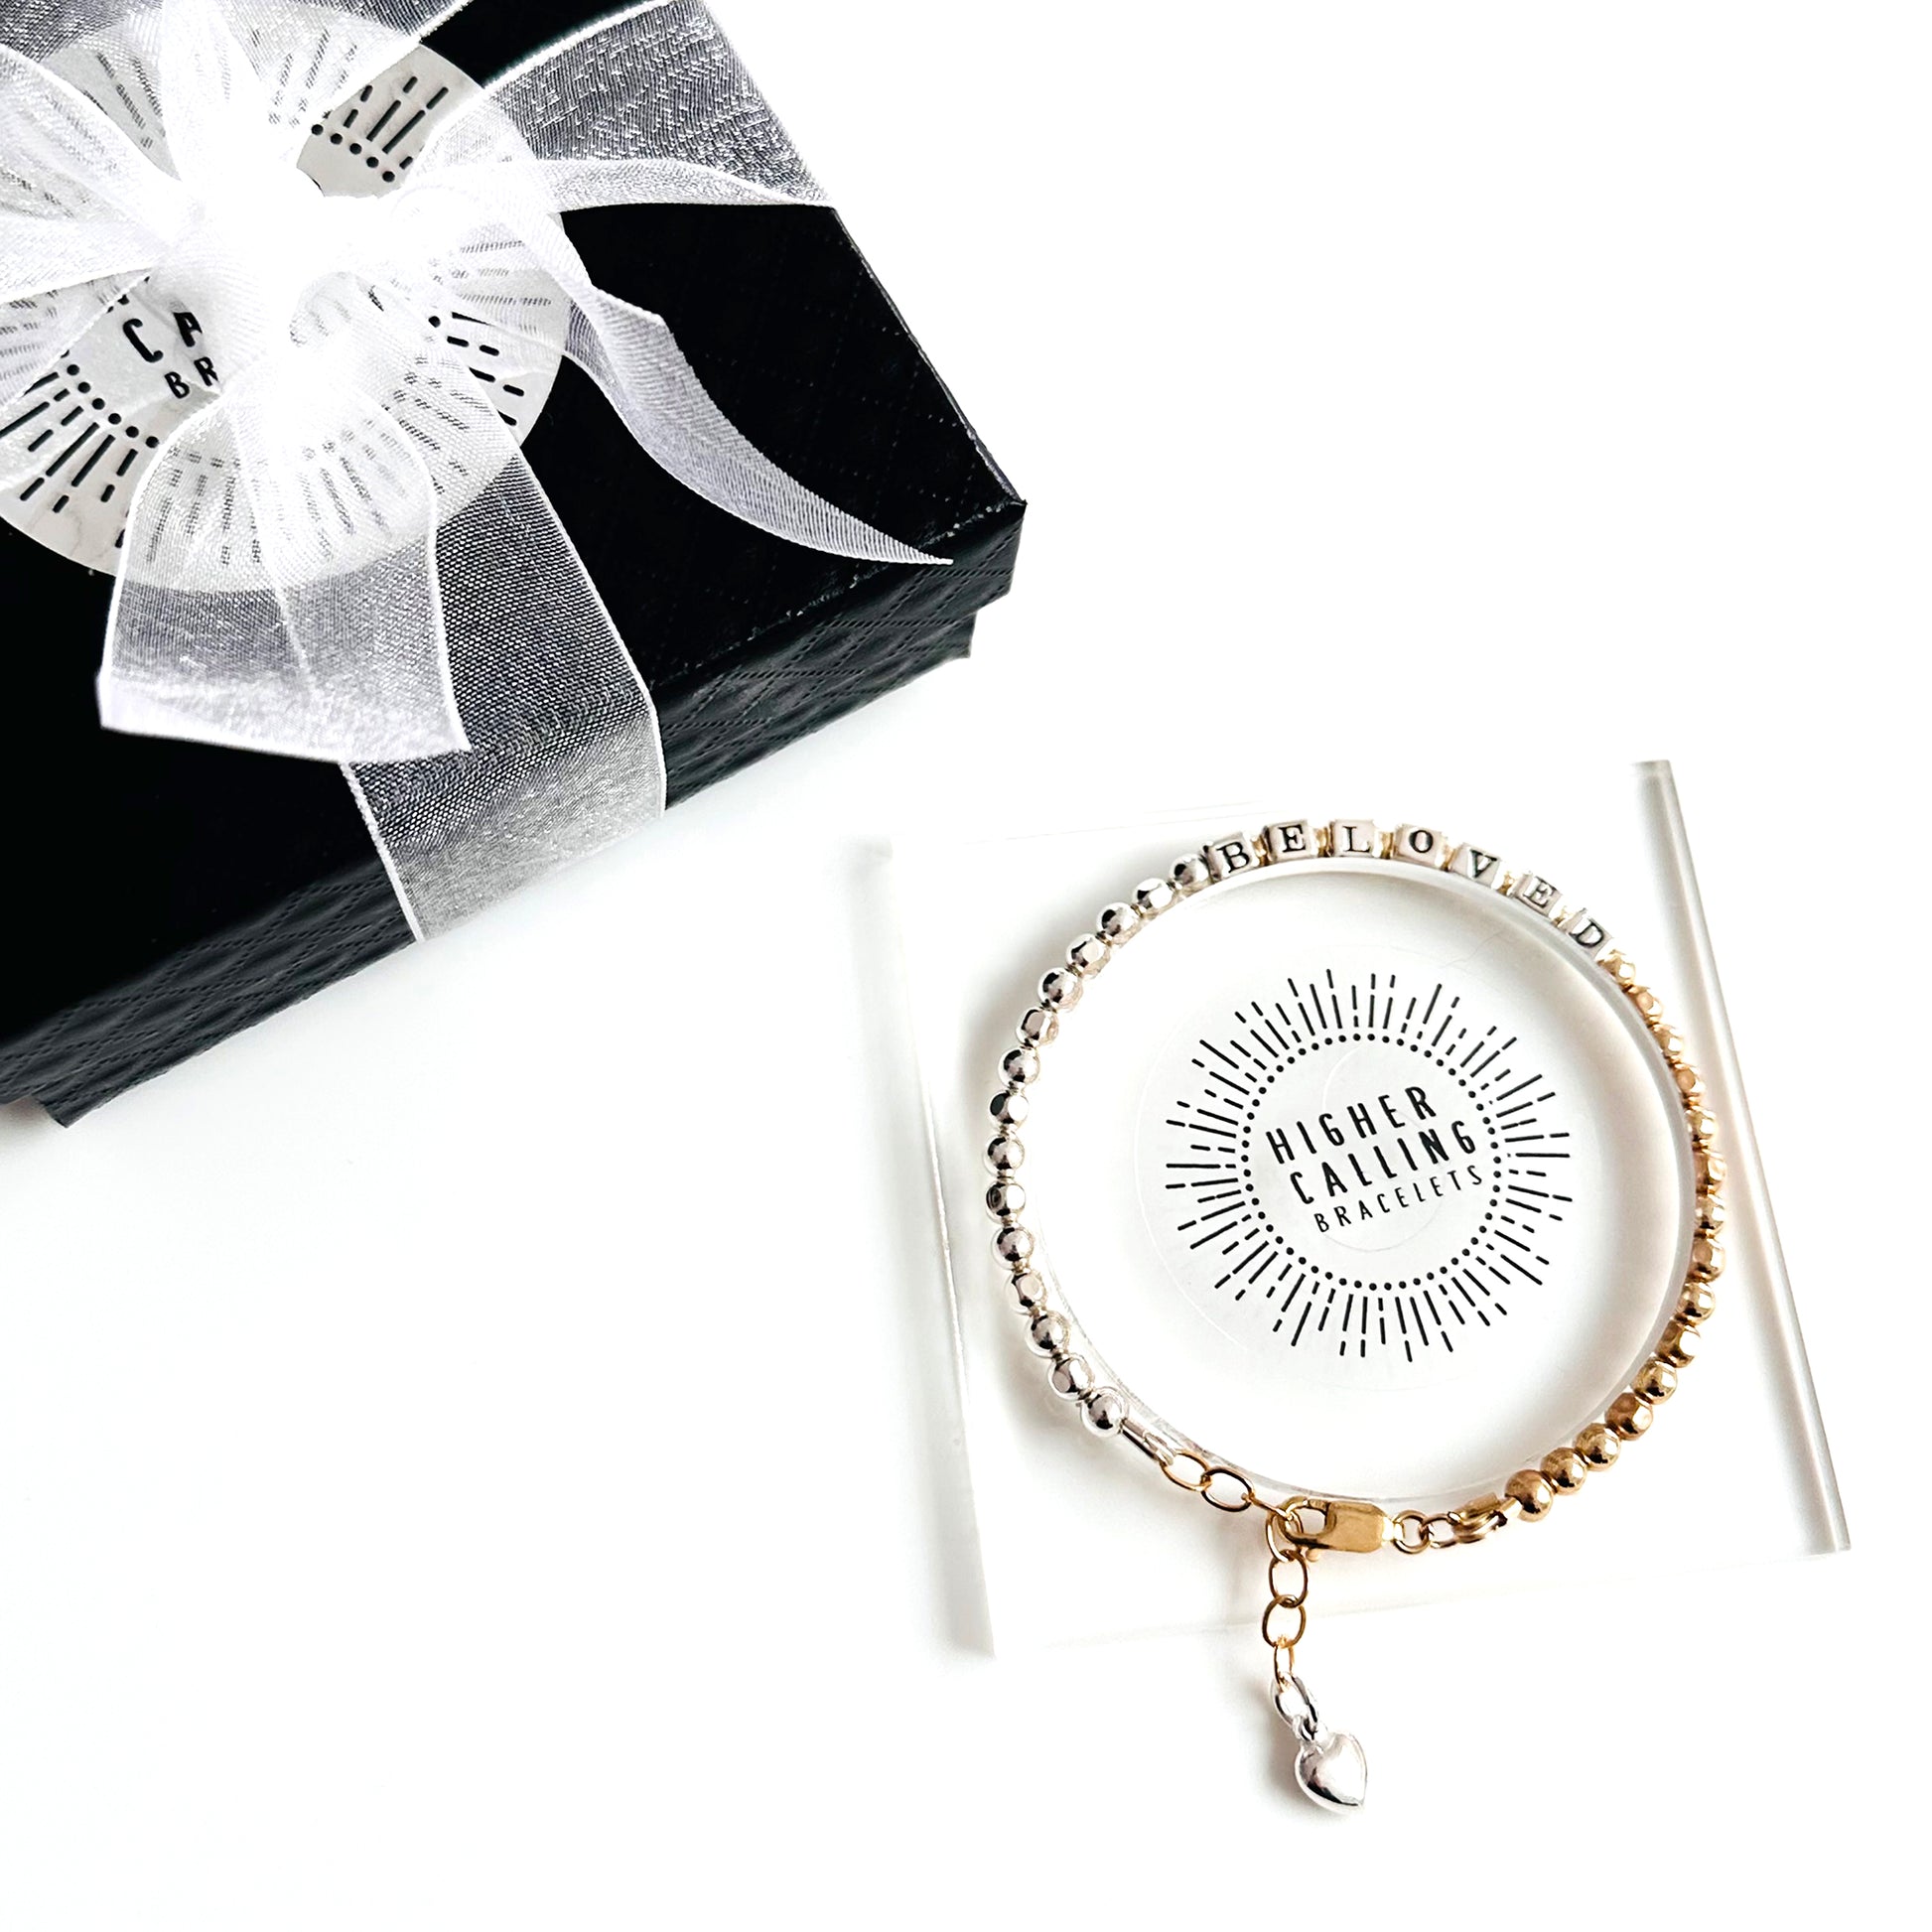 Beloved Mixed Metals Bracelet jewelry shown in Higher Calling Bracelets package